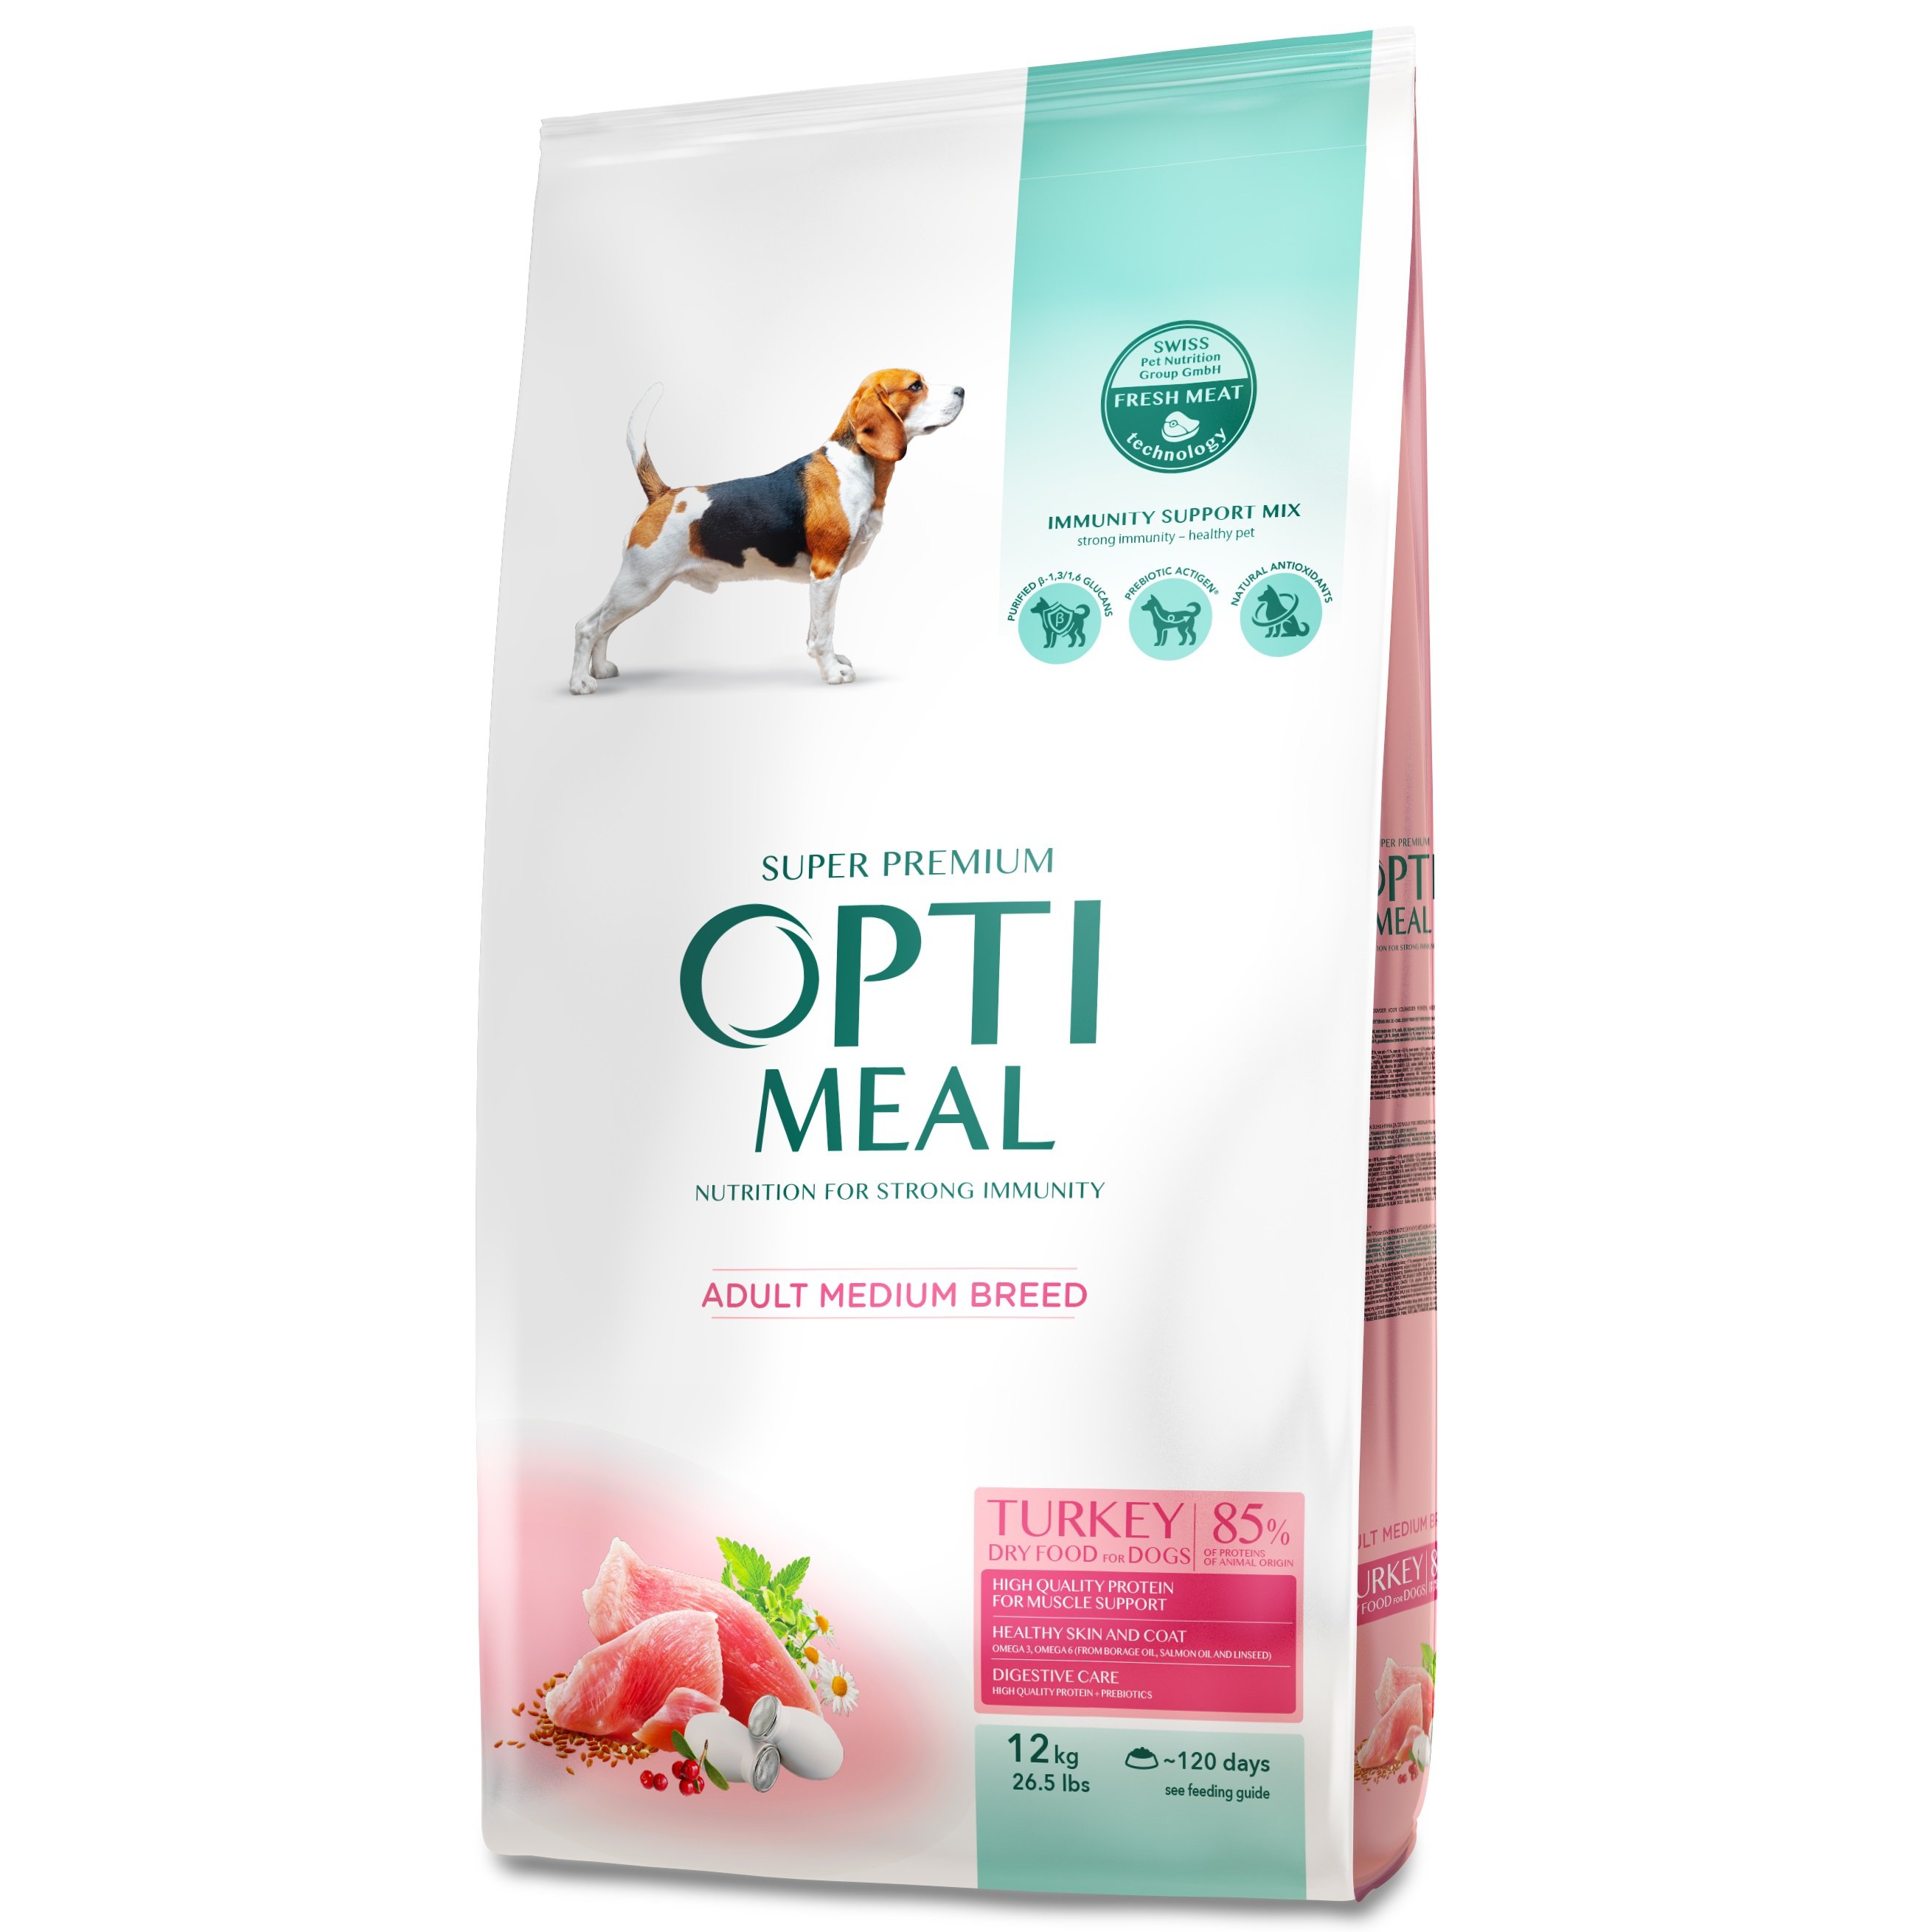 Сухой корм для взрослых собак средних пород Optimeal, индейка, 12 кг (B1740501) - фото 1